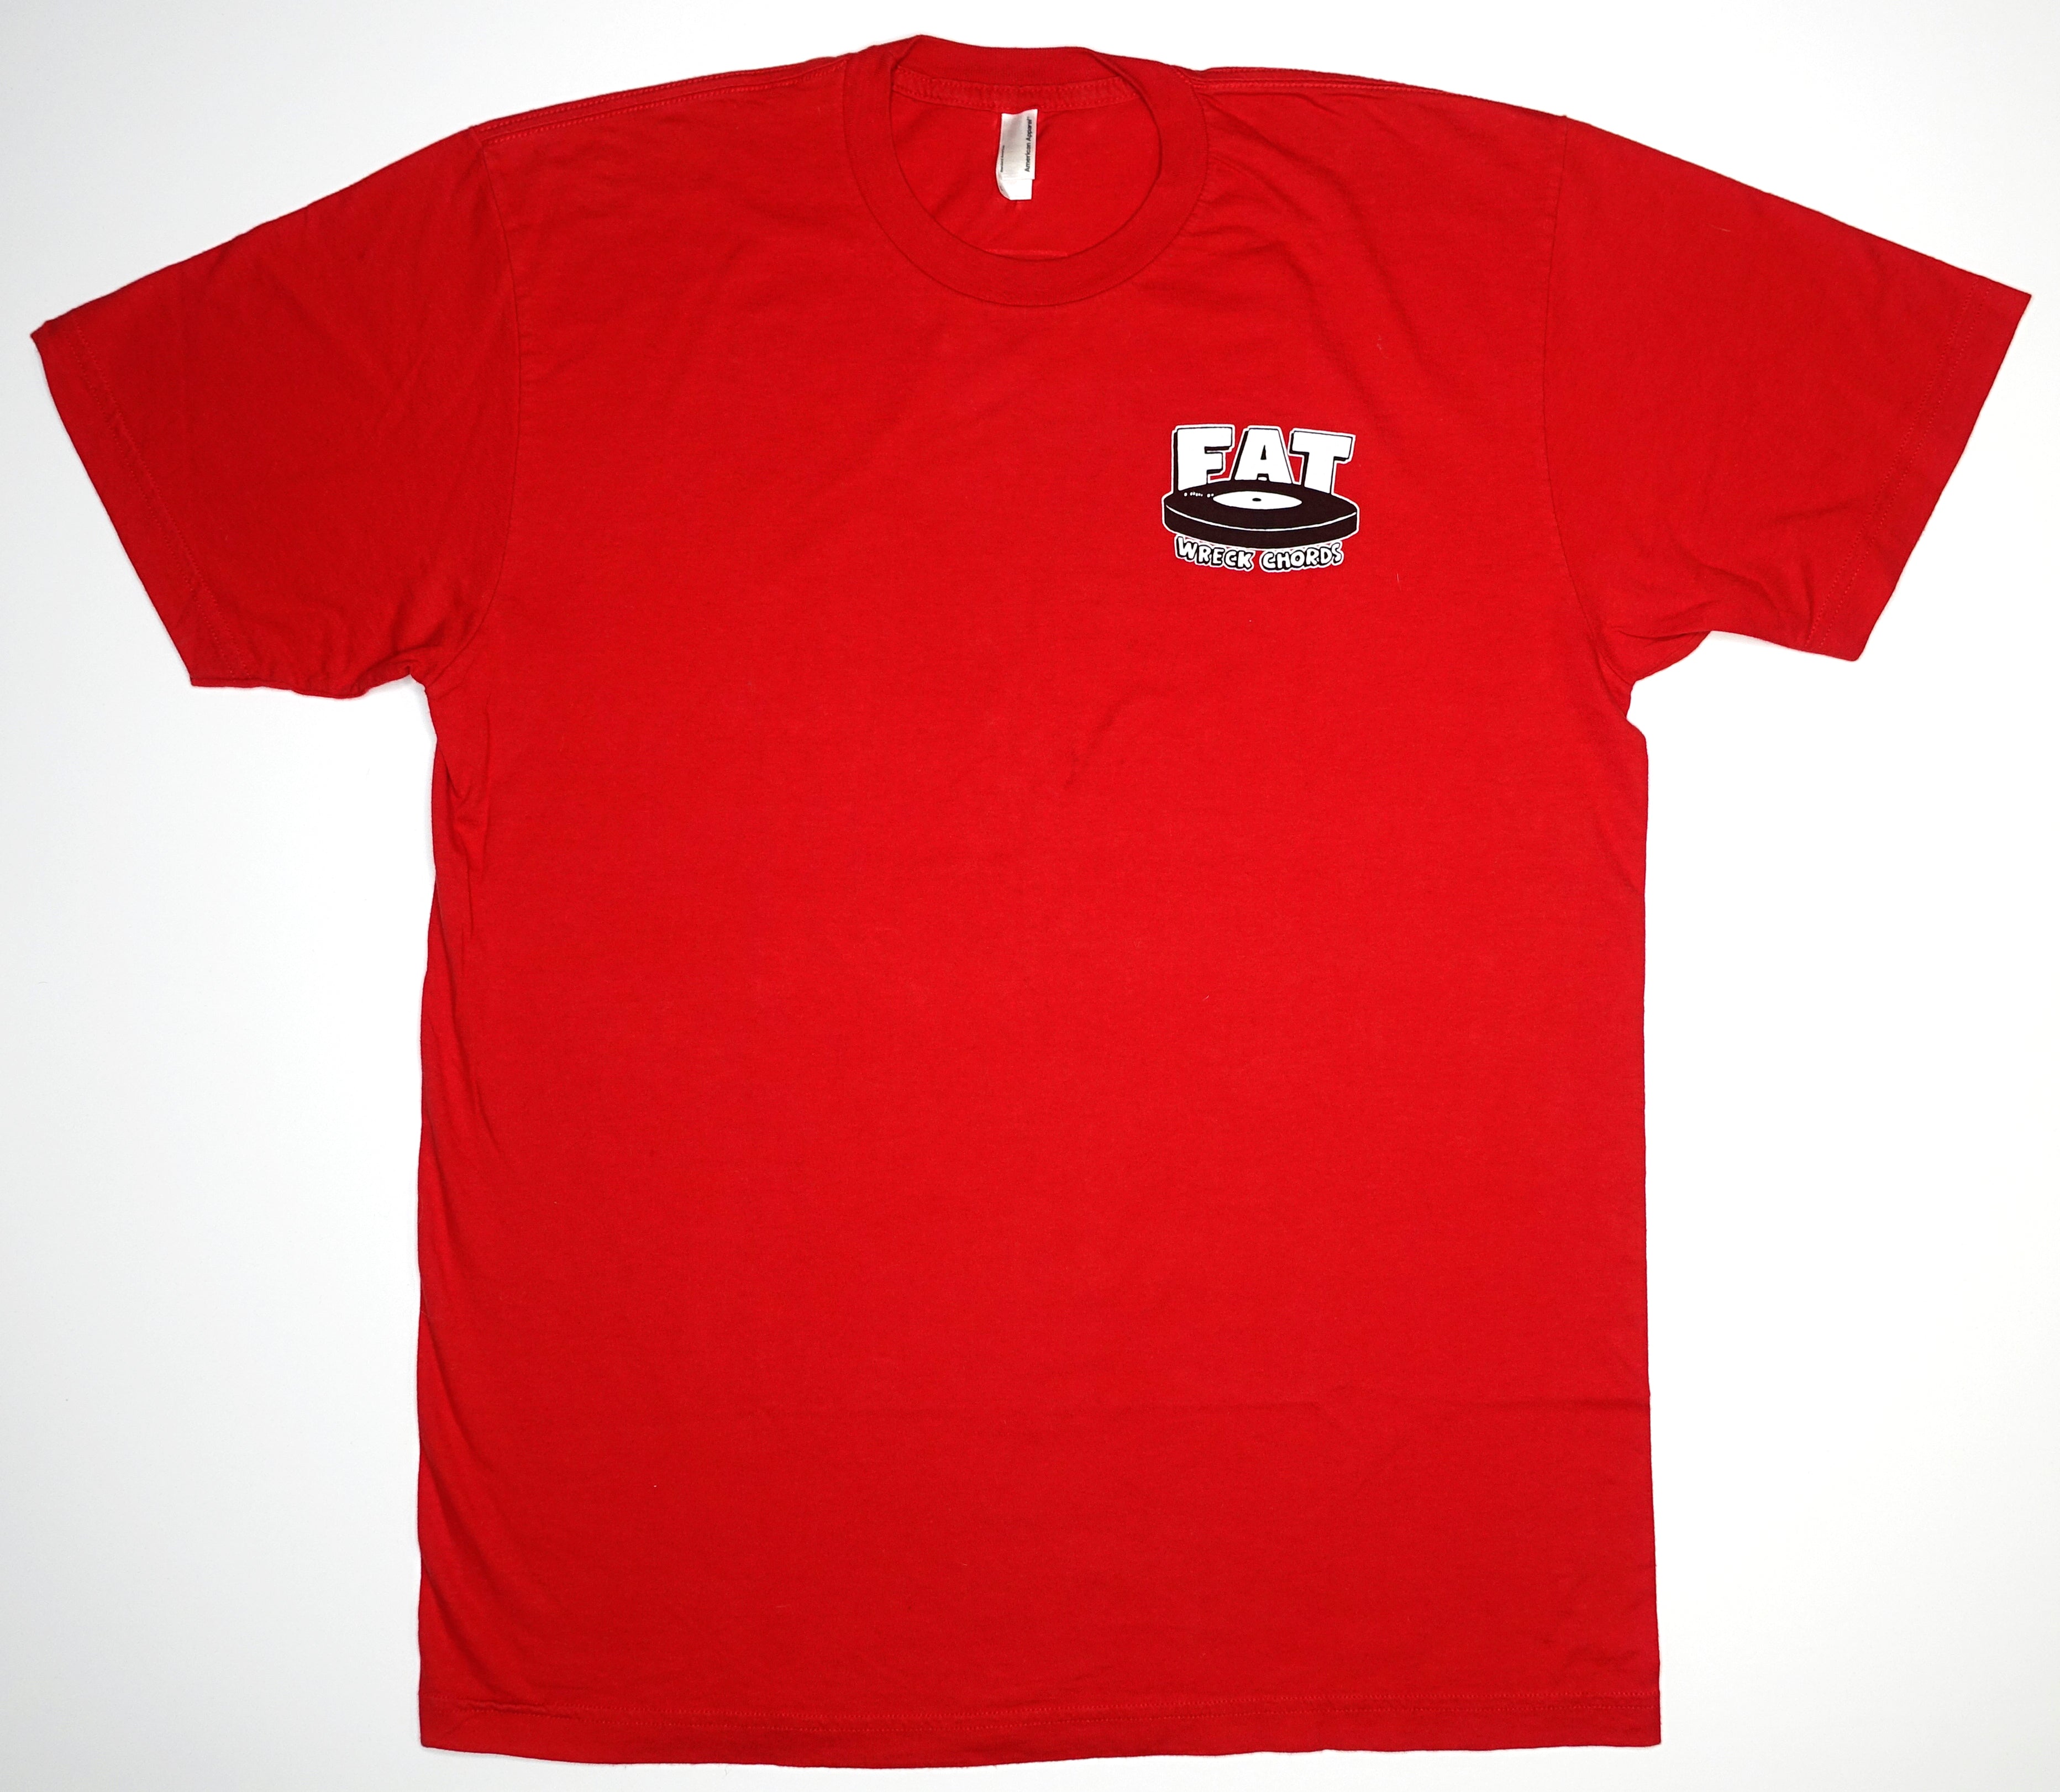 Fat Wreck Chords - Classic Logo Shirt Size Large